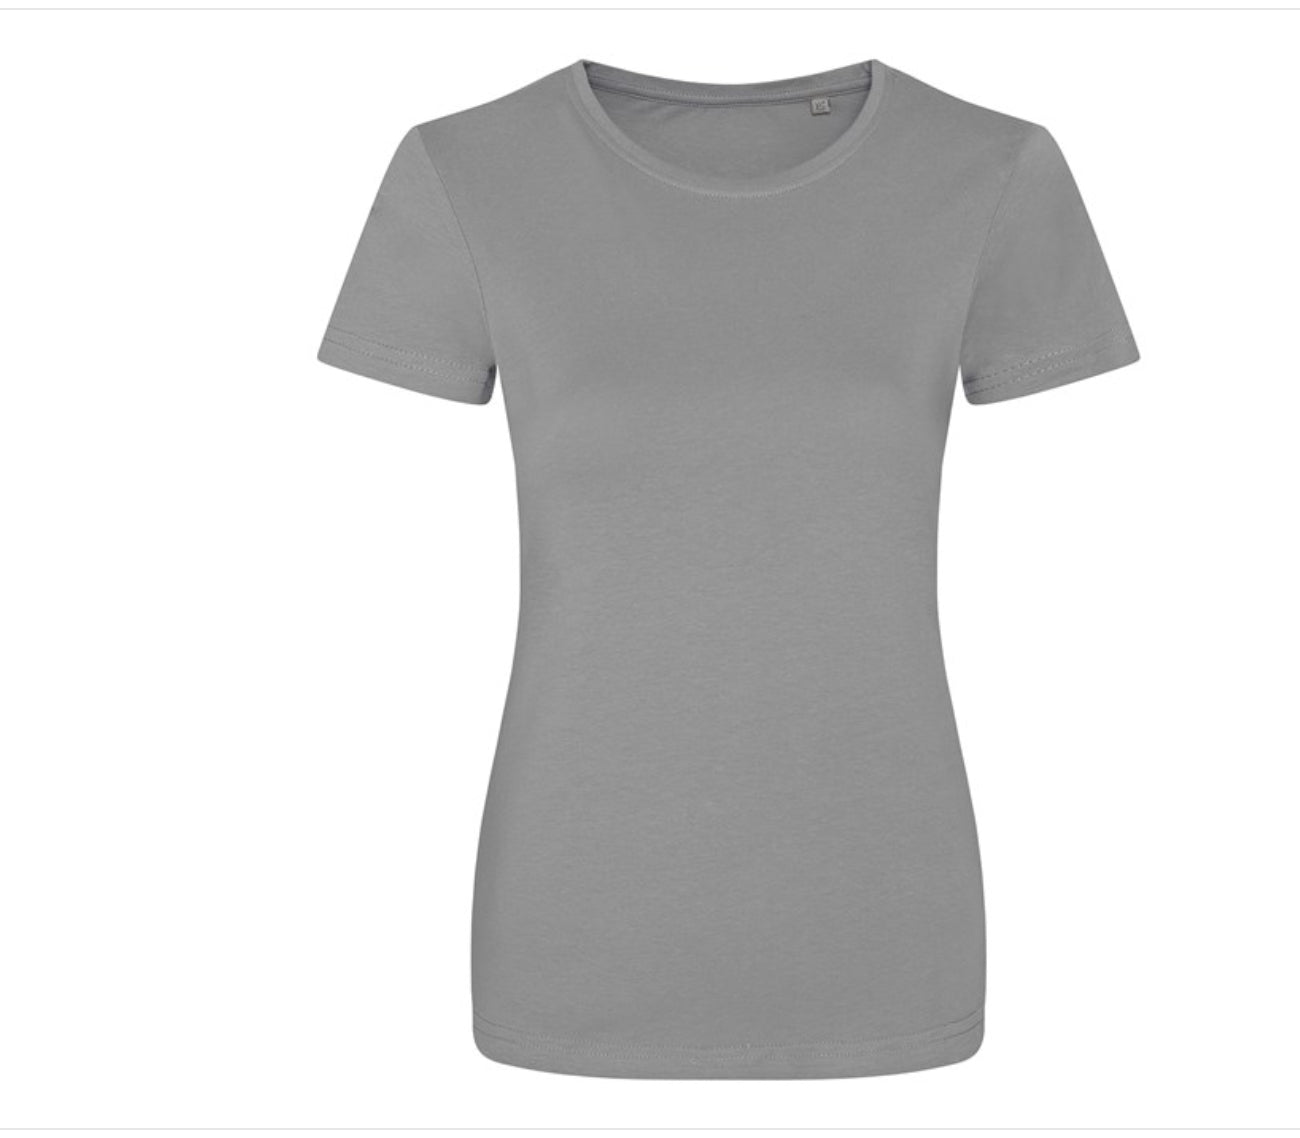 Women’s light grey organic cotton t-shirt